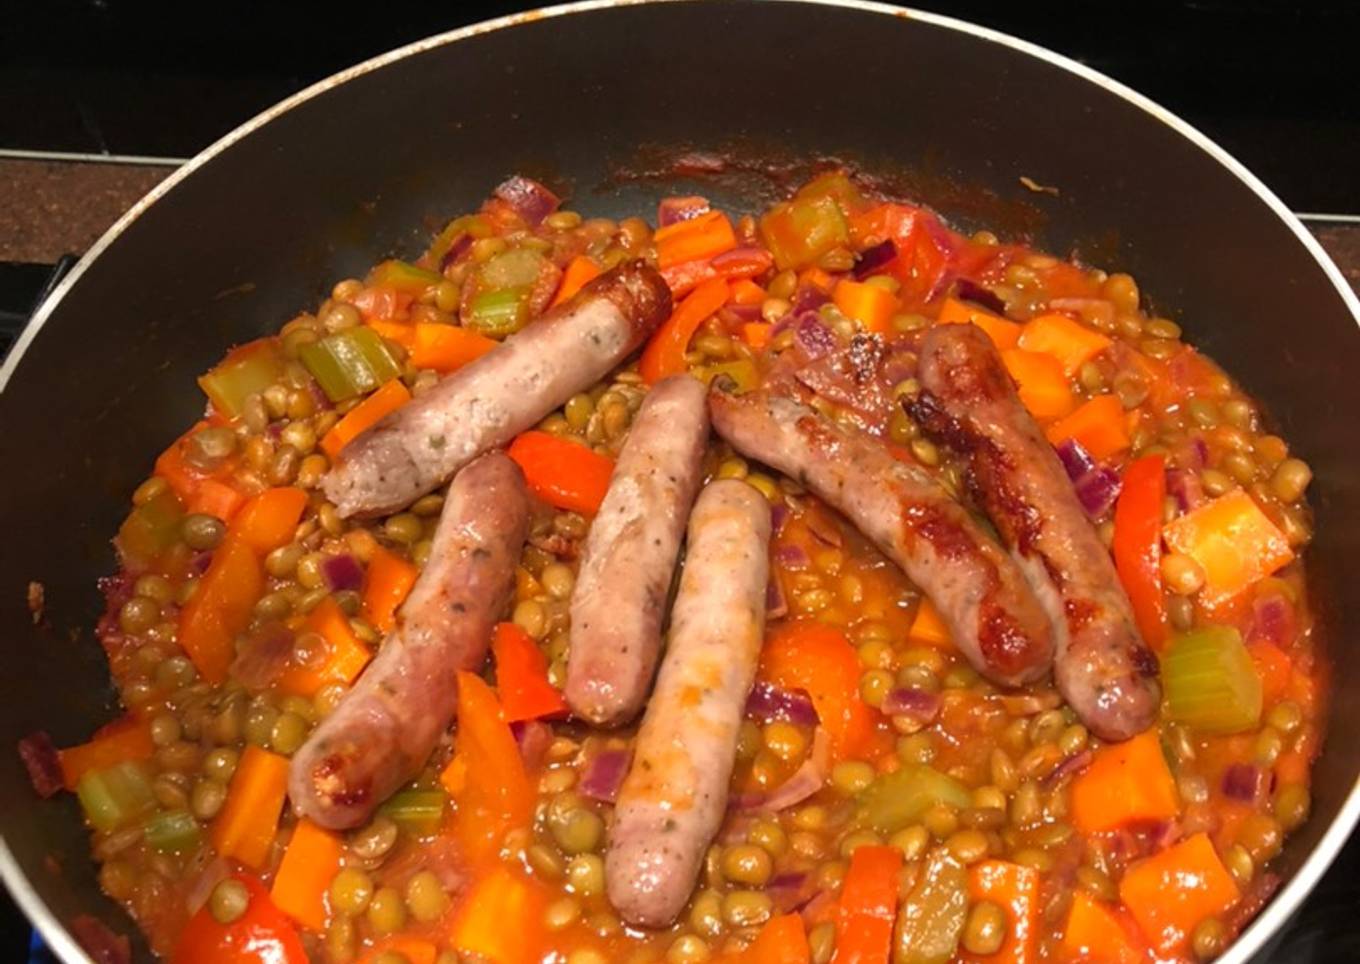 Sausage and lentil casserole (GF)